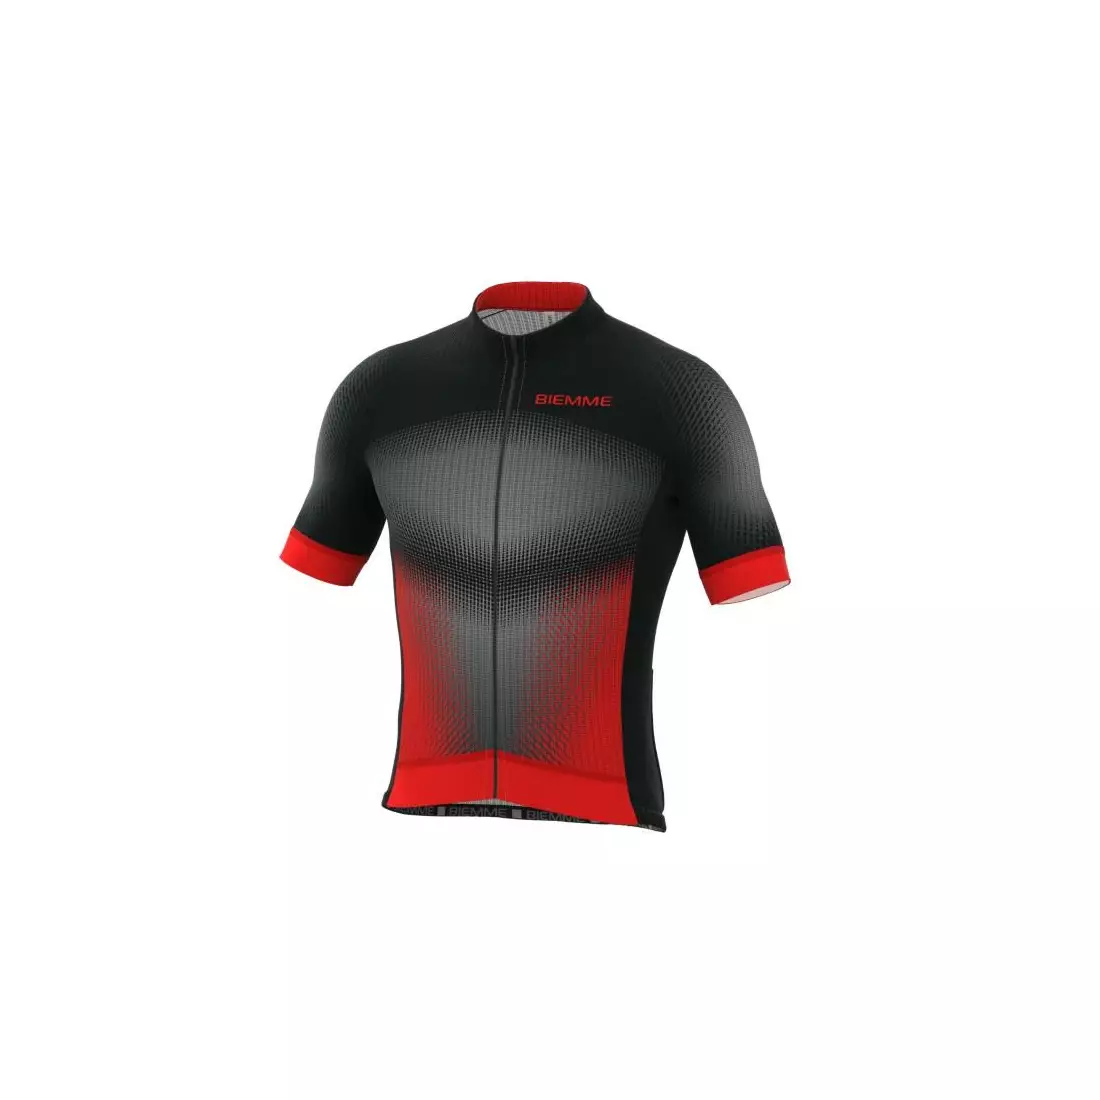 Biemme pánský cyklistický dres ZONCOLAN černá a červená